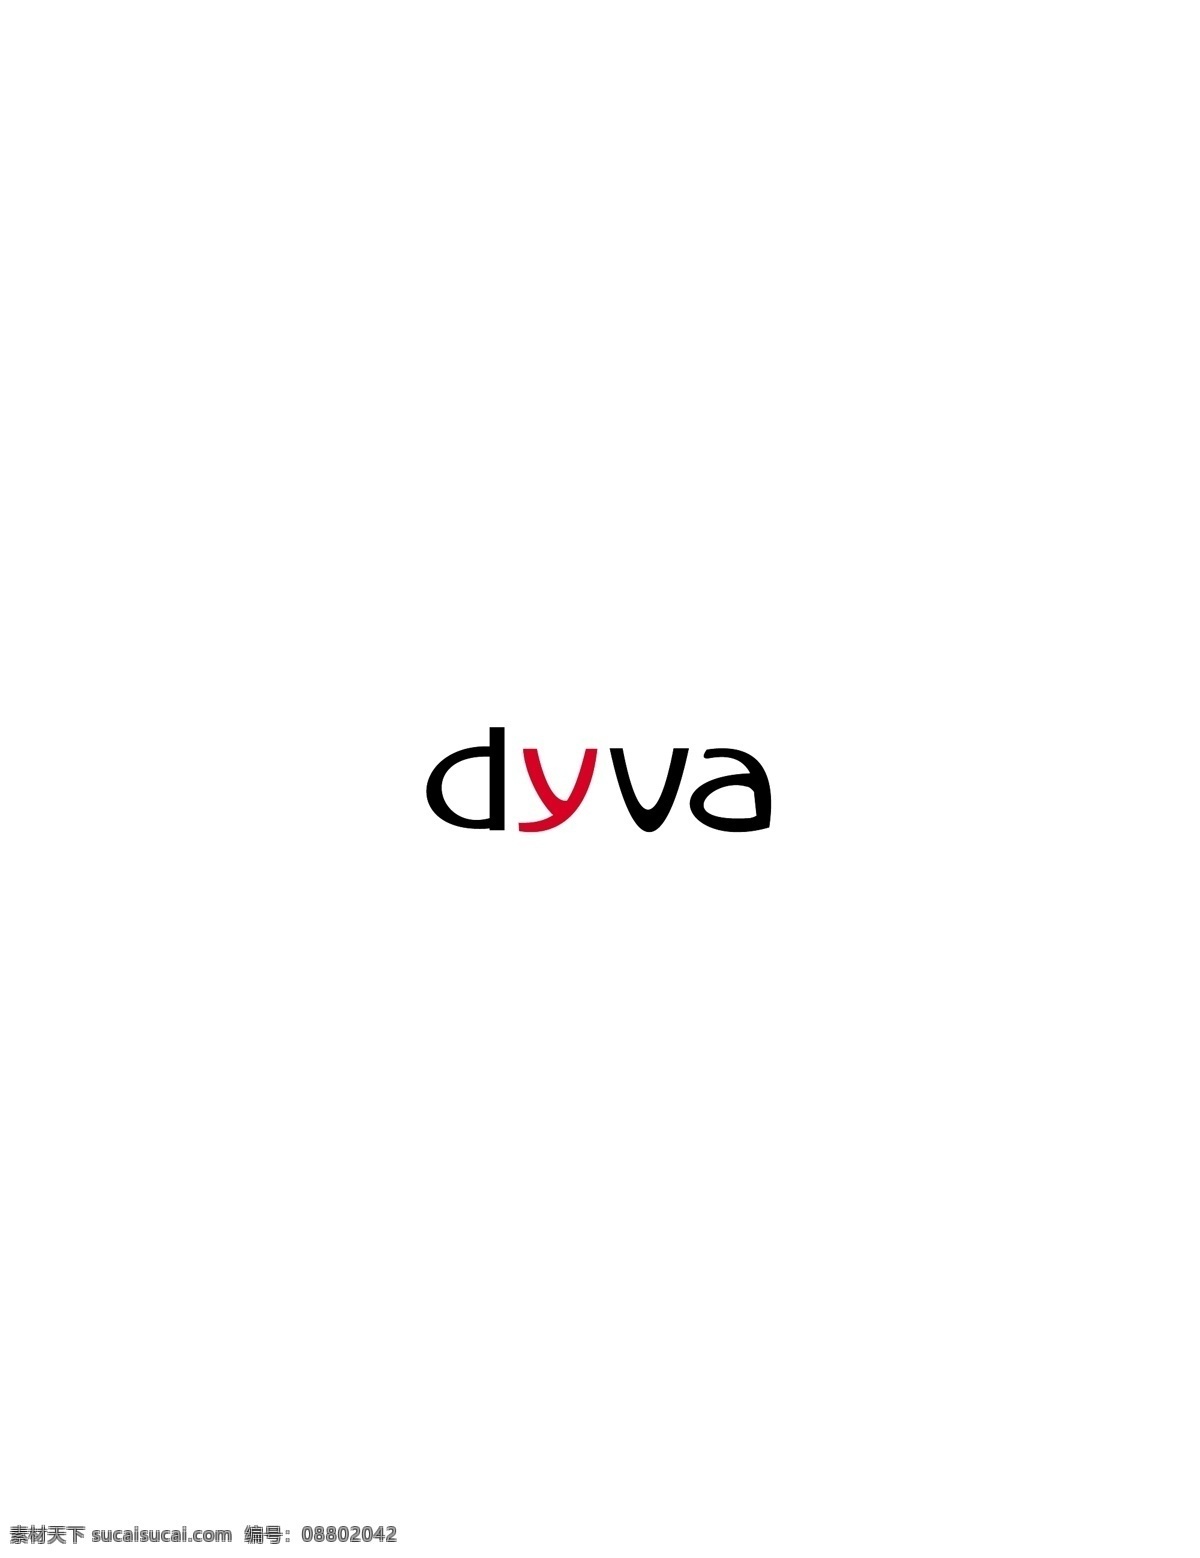 logo大全 logo 设计欣赏 商业矢量 矢量下载 dyva1 服饰 品牌 标志设计 欣赏 网页矢量